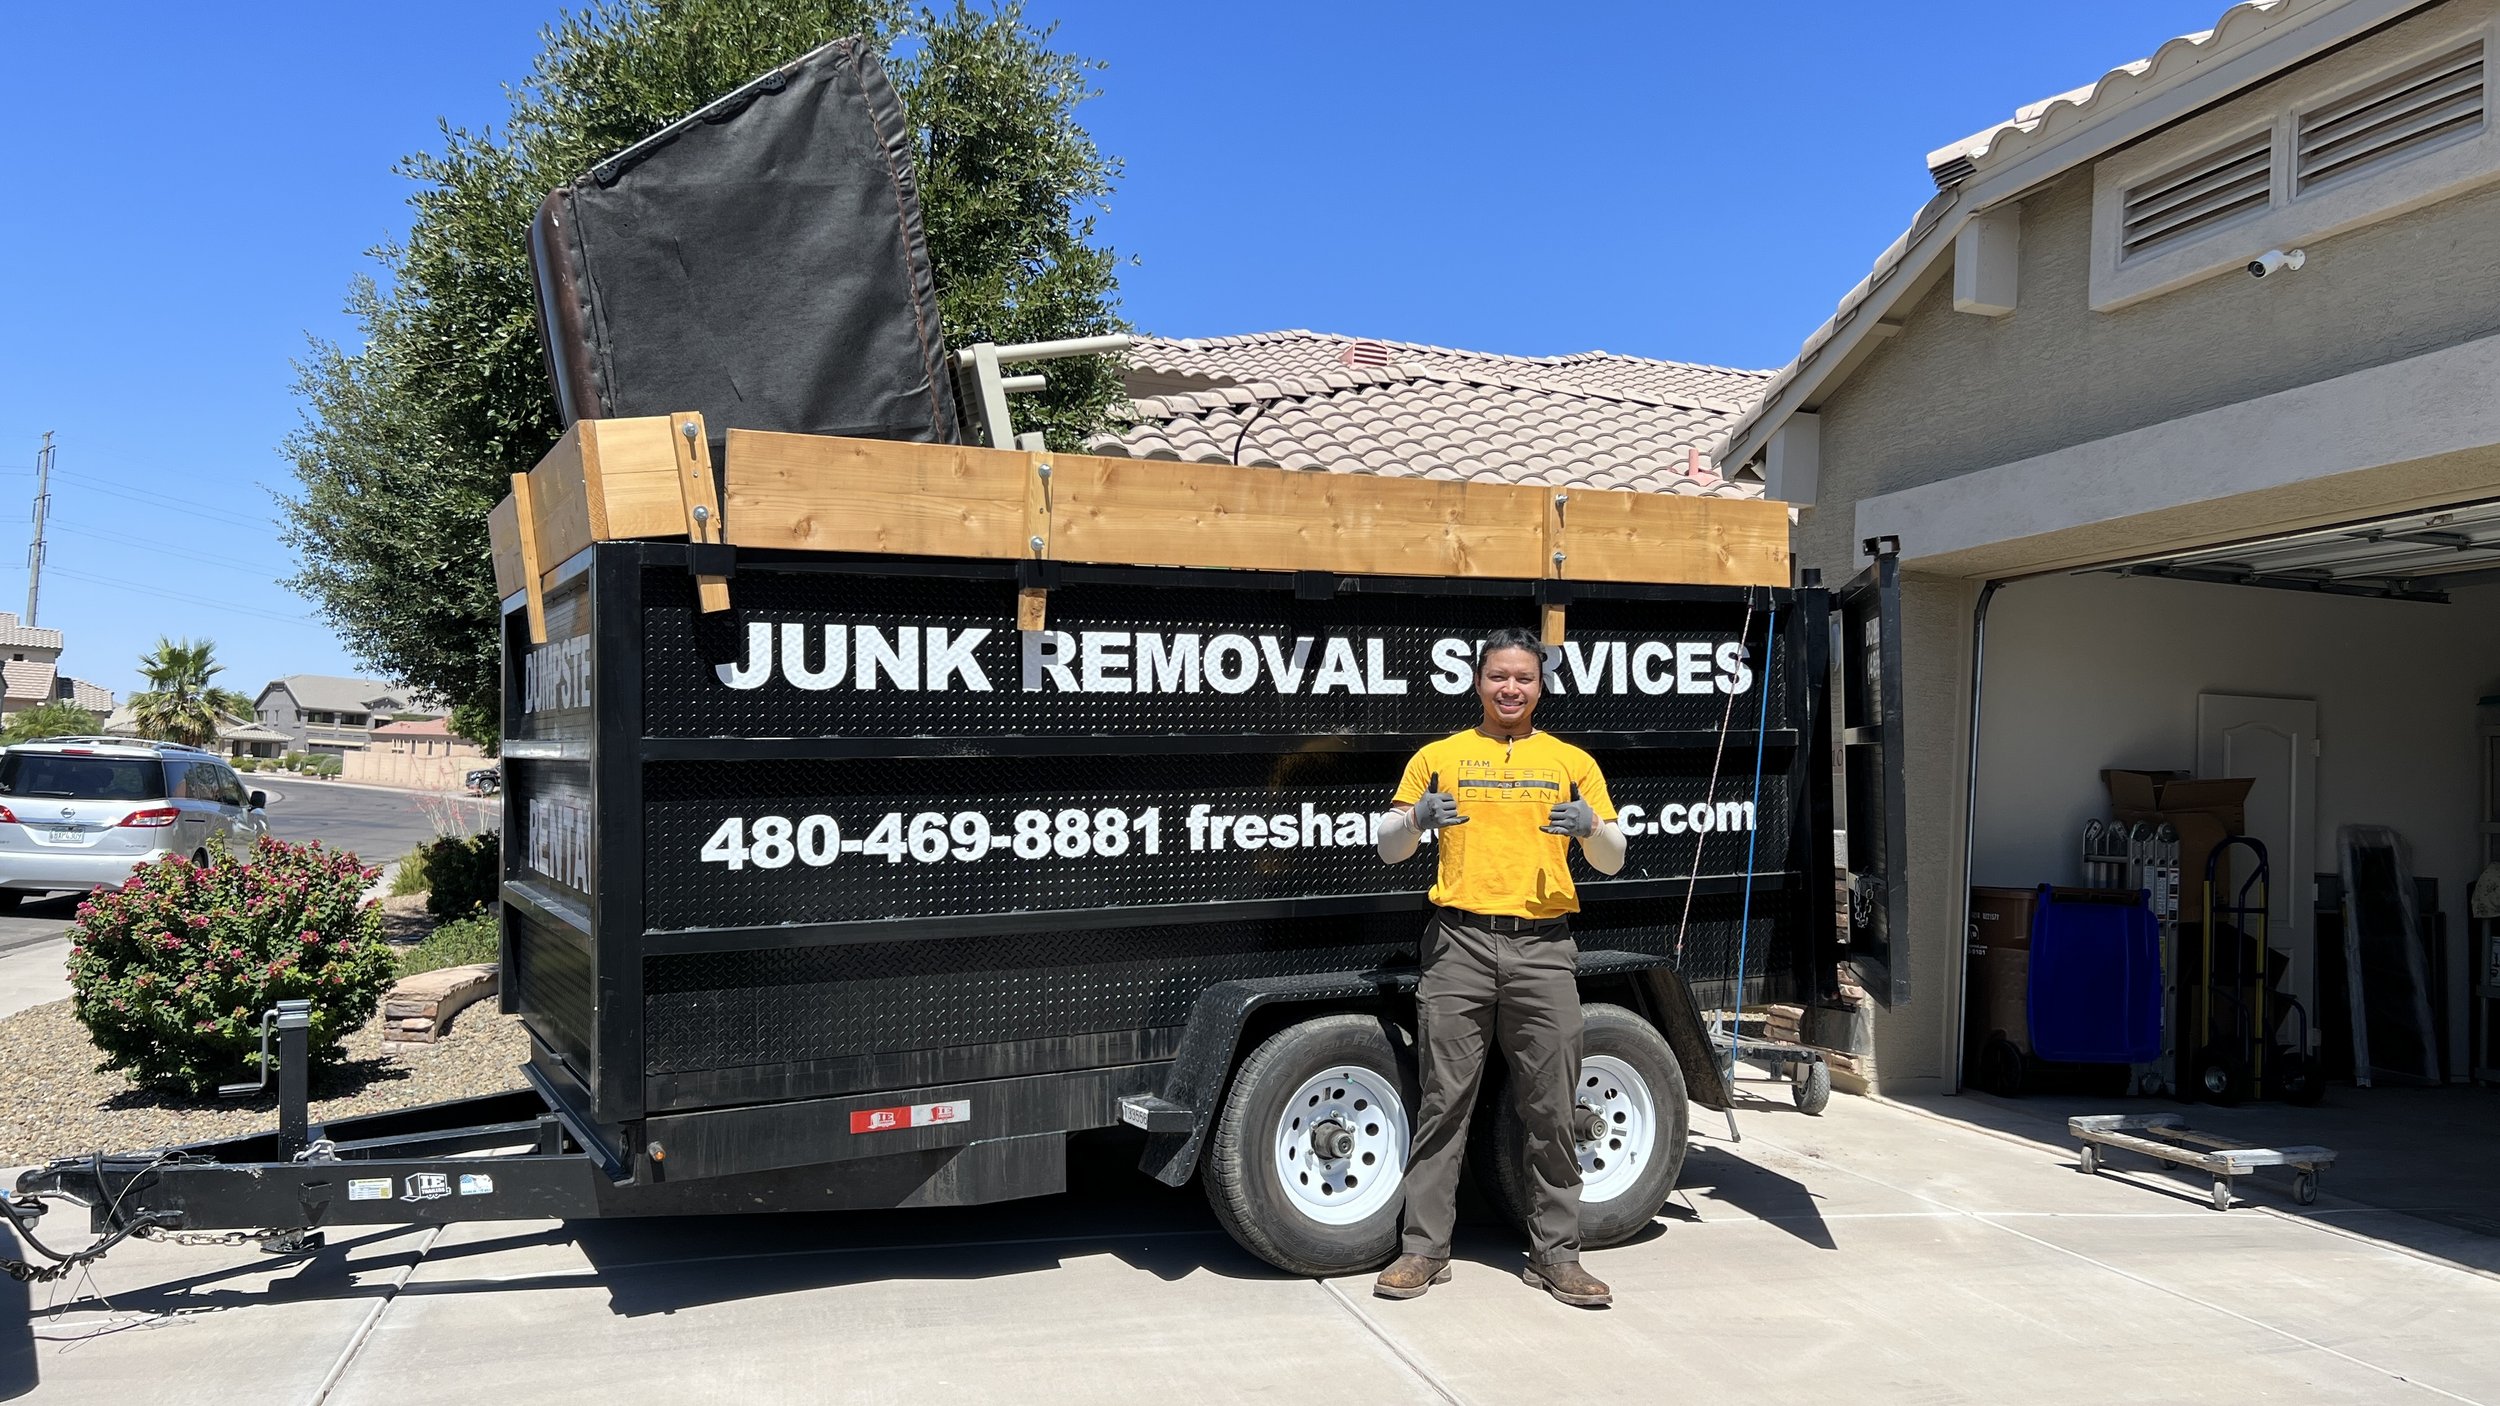 Junk Removal Phoenix - (602) 799-4181 - Hauling Worries Away